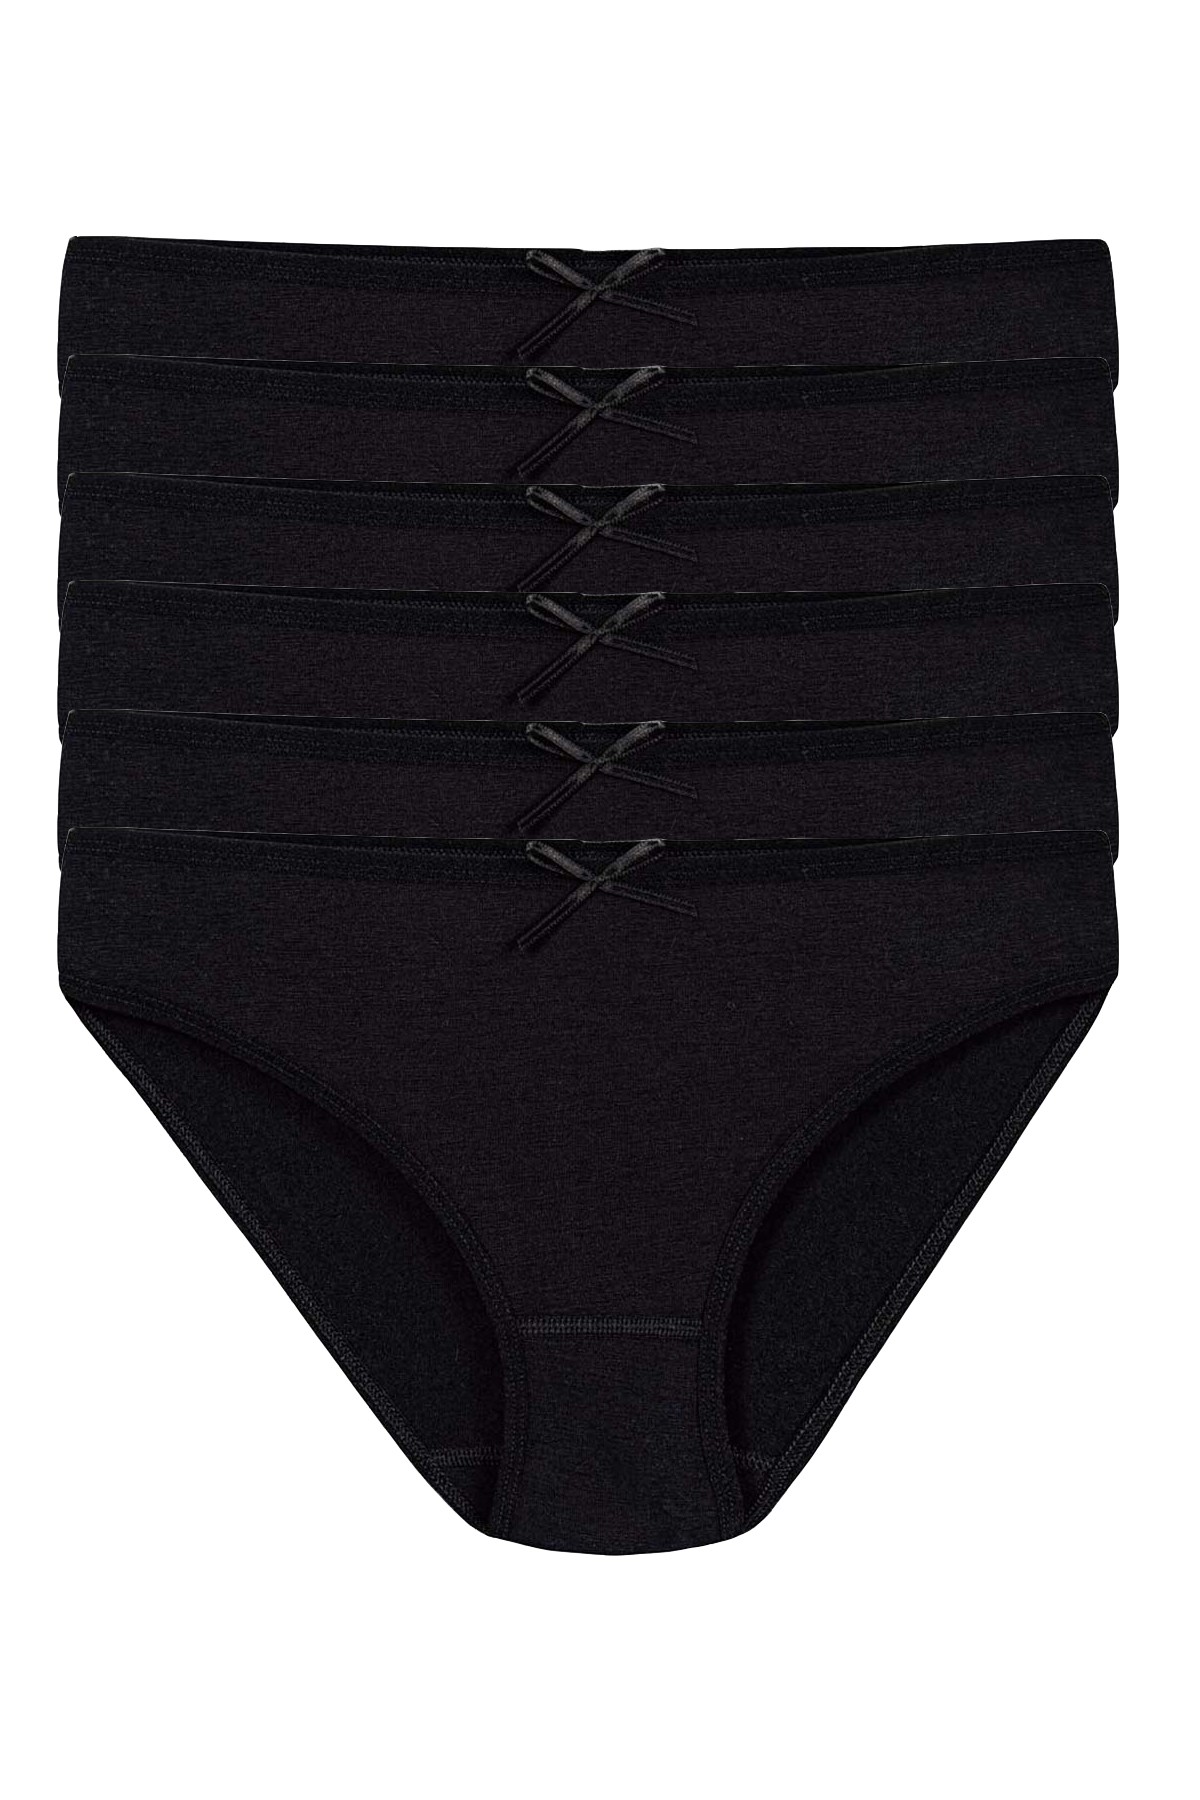 Kadın Siyah 6'lı Paket Likralı Viscon Bikini Külot